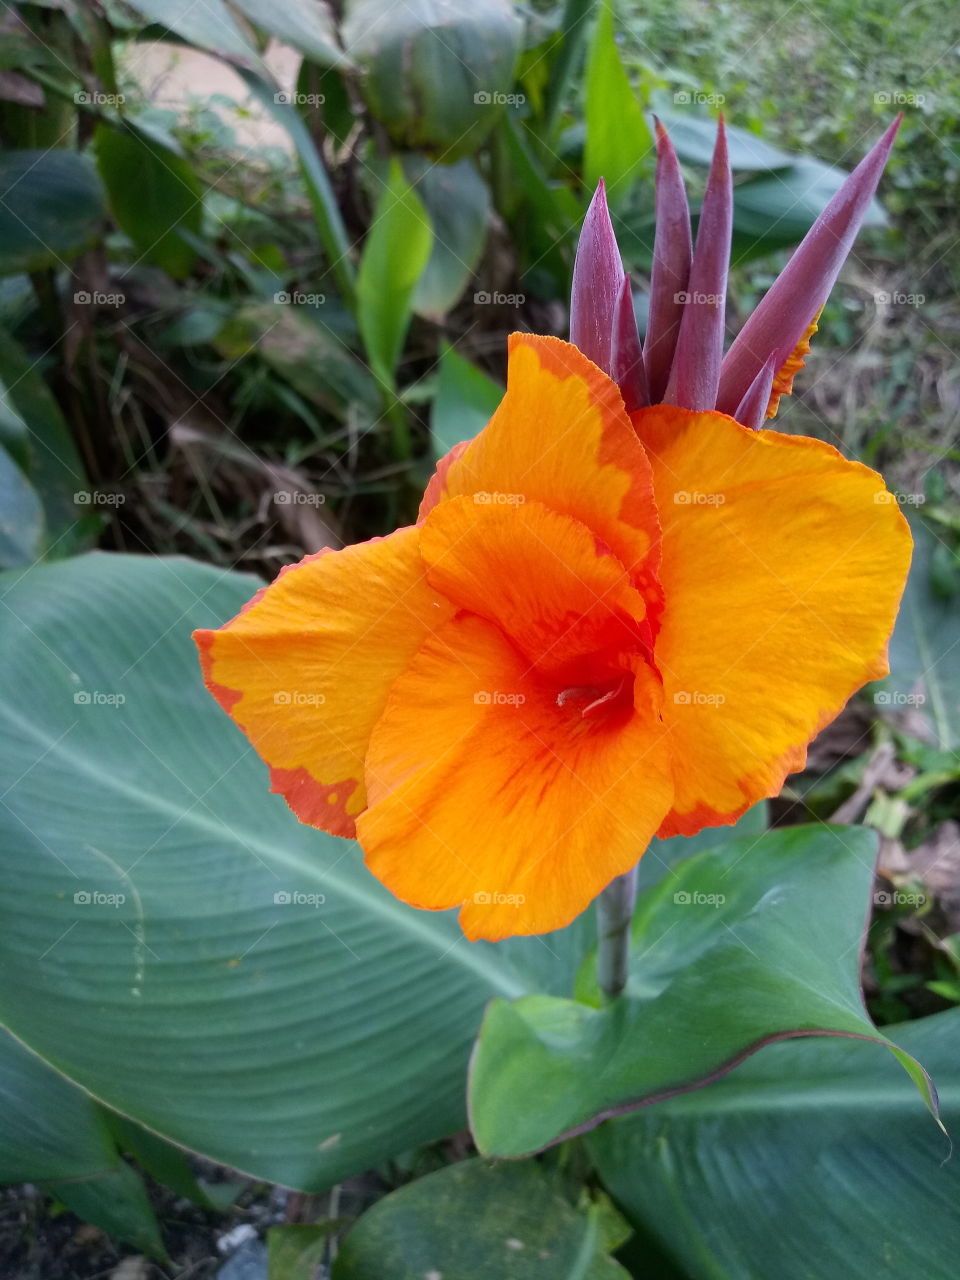 bright vivid orange canna lily flower